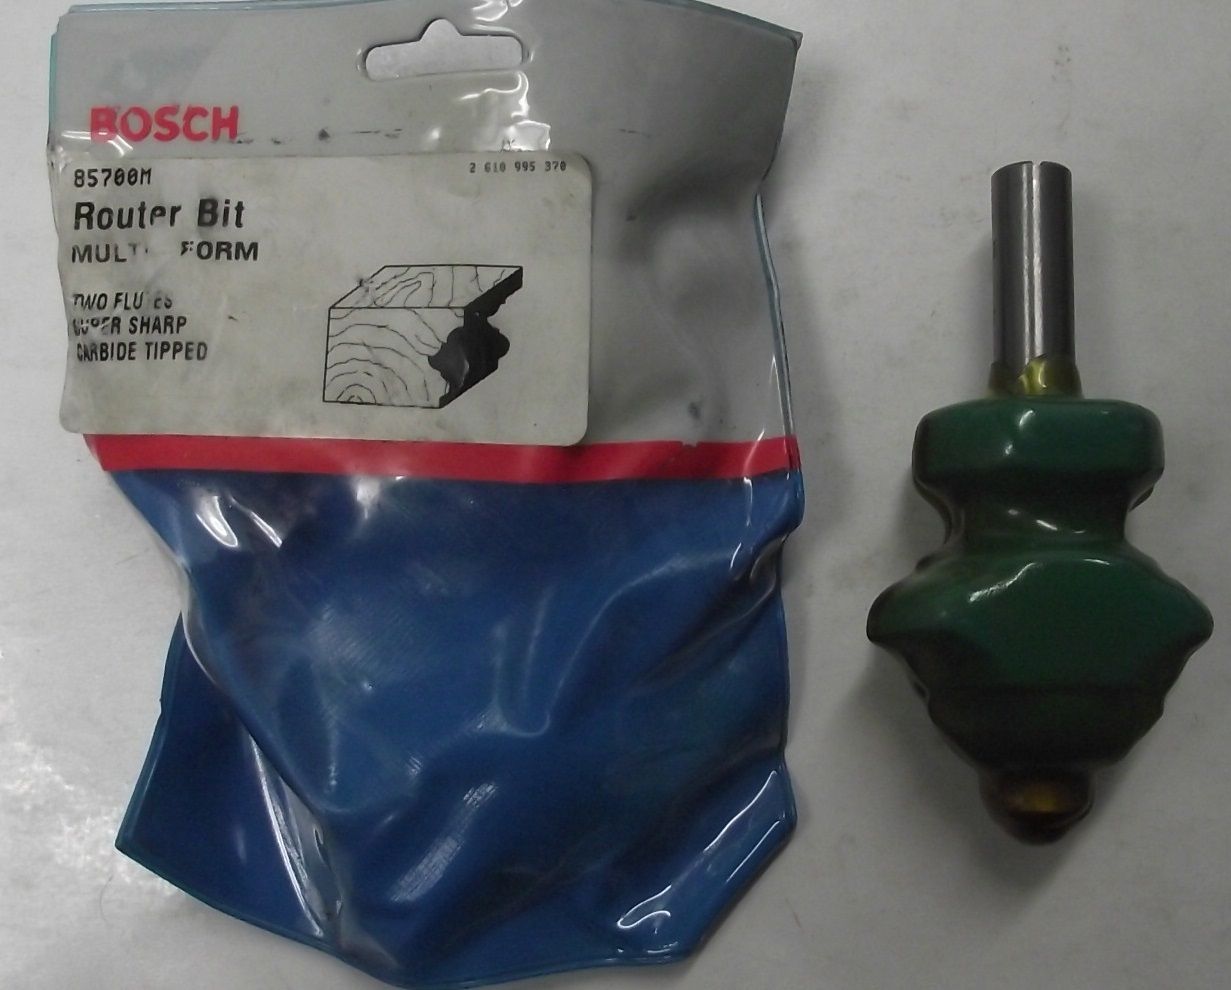 Bosch 85700M 2-1/4" X 1-7/8" Carbide Tipped Multi-Form Router Bit 1/2" Shank USA